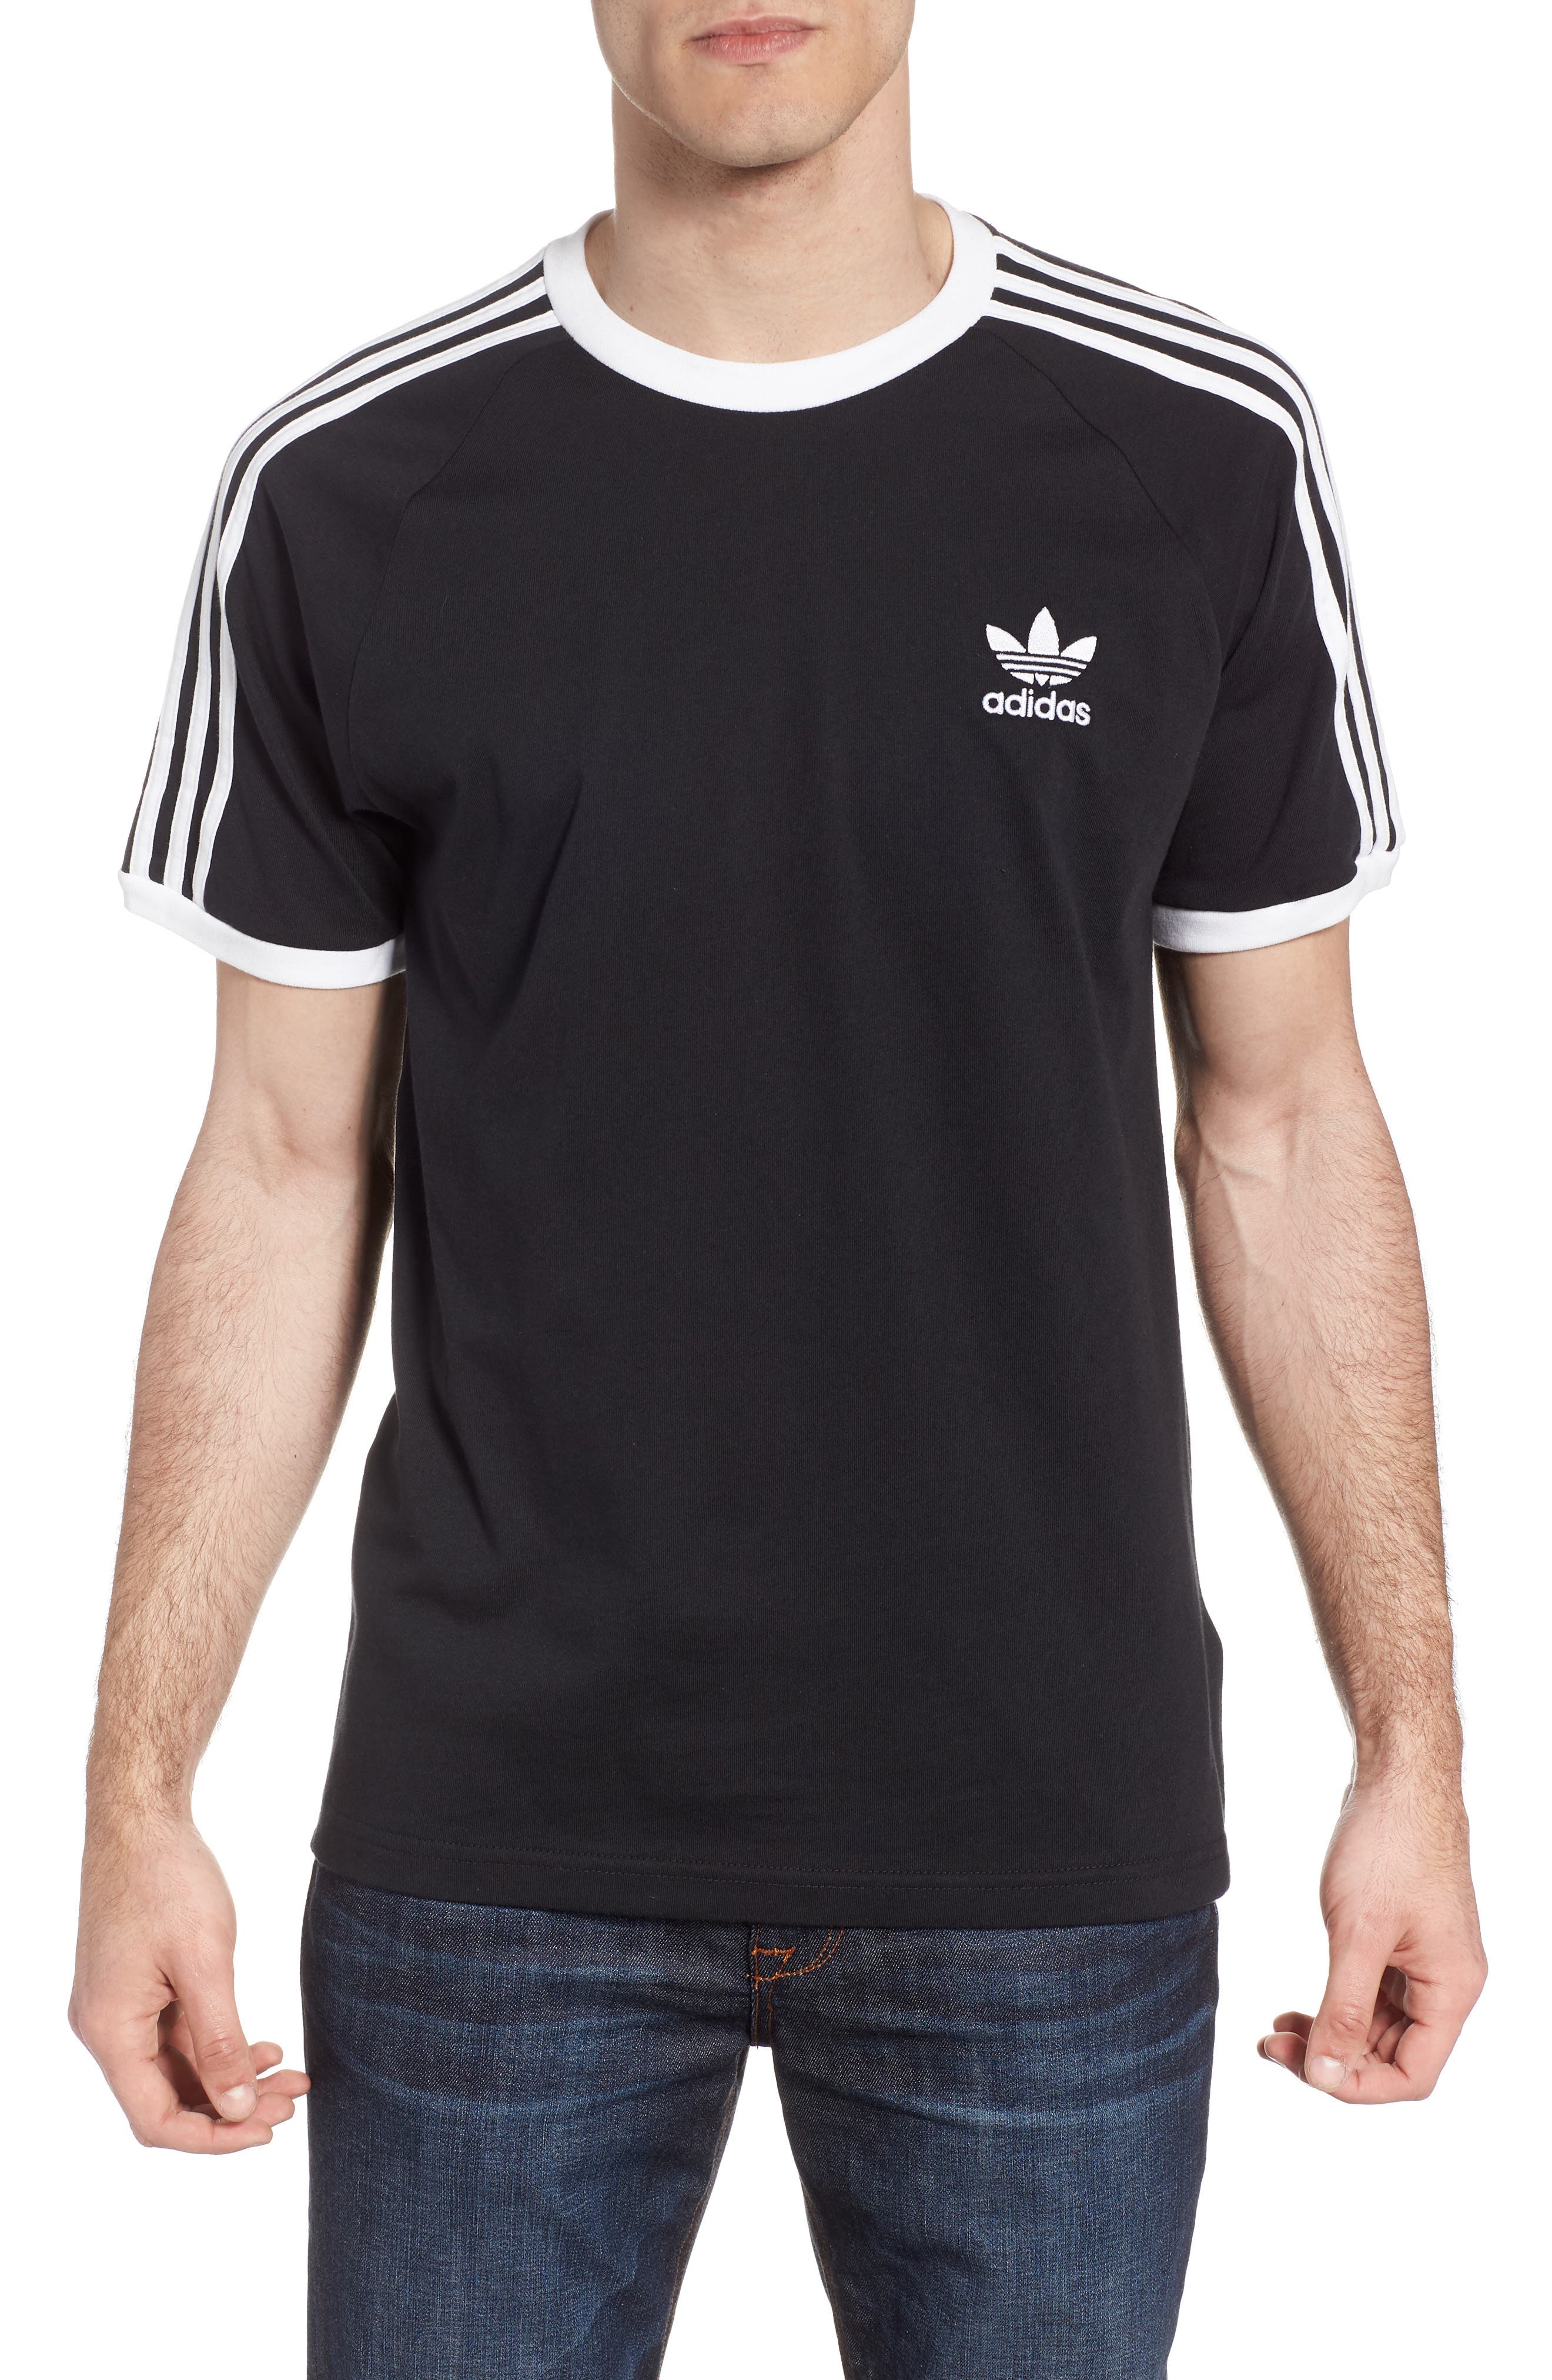 UPC 191027120915 product image for Men's Adidas Originals 3-Stripes T-Shirt, Size Large - Black | upcitemdb.com